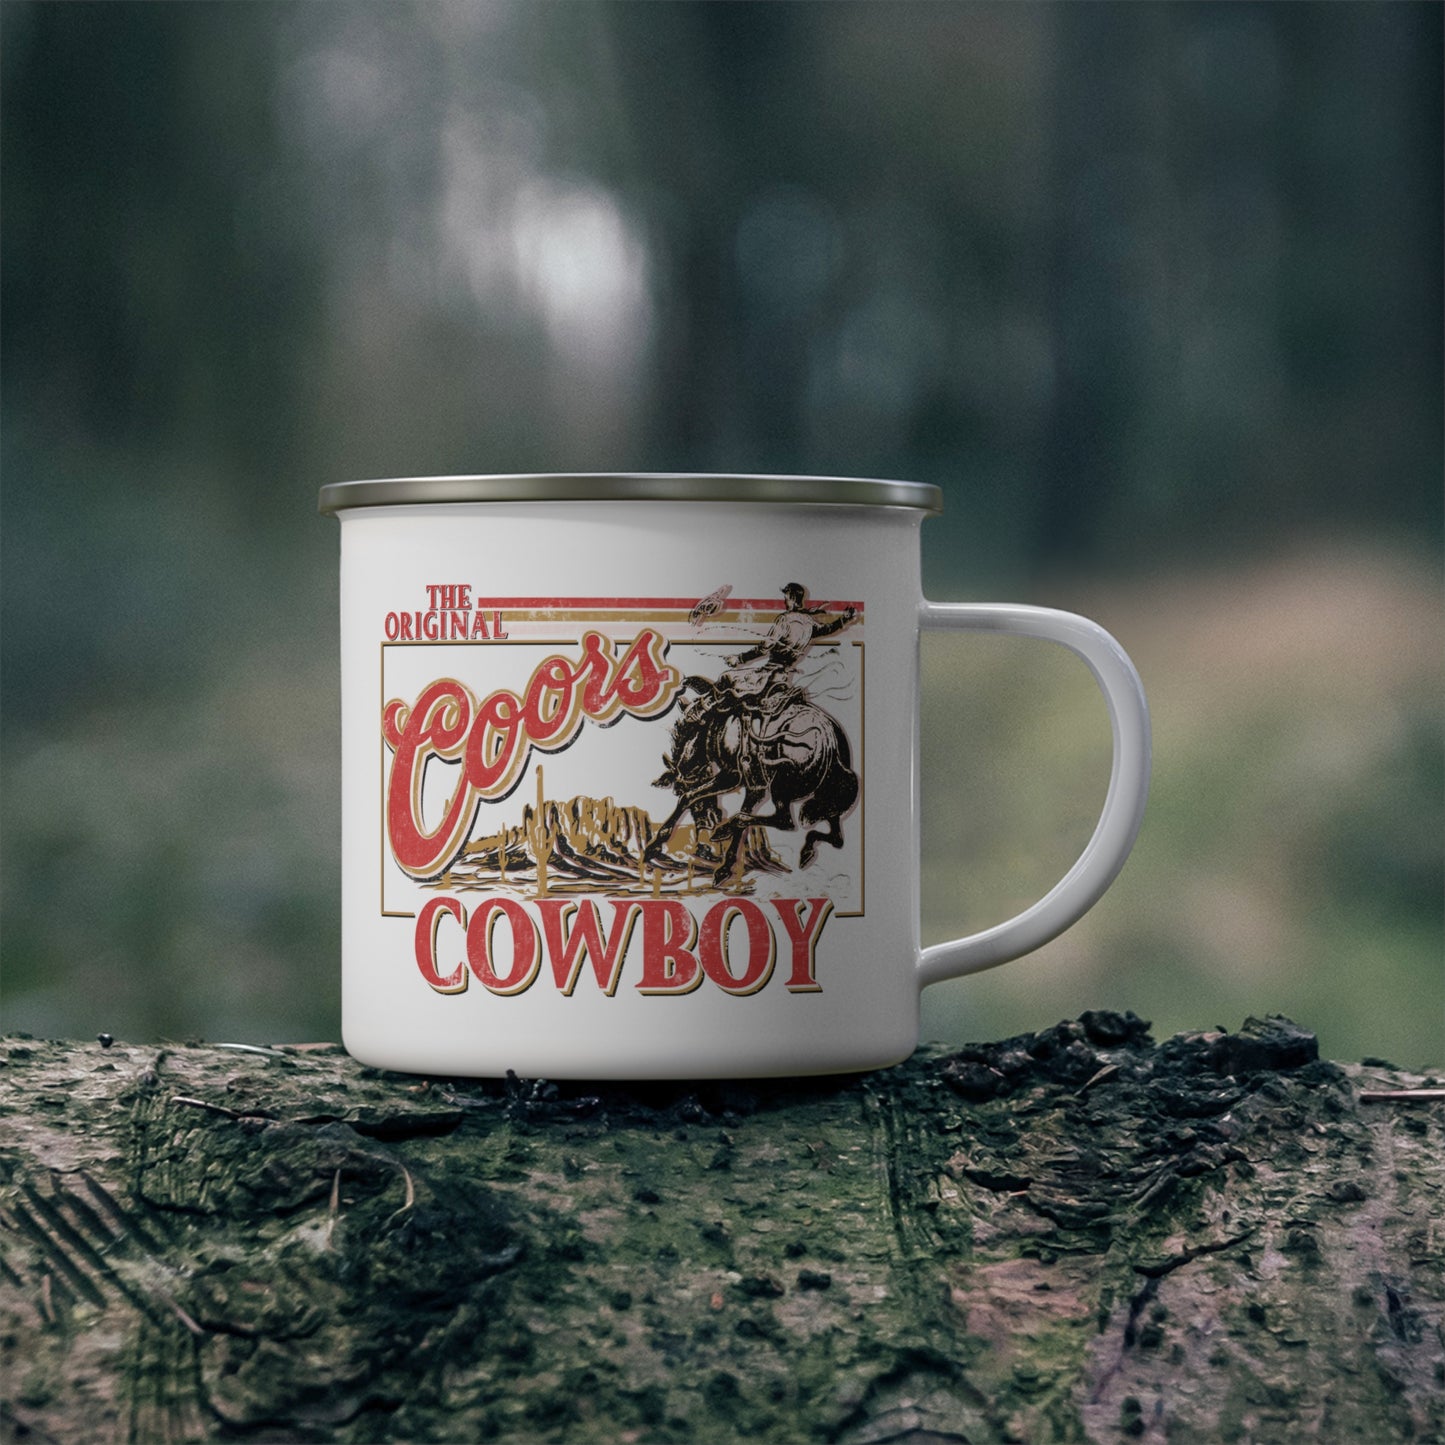 The Original Coors Cowboy Camping Mug